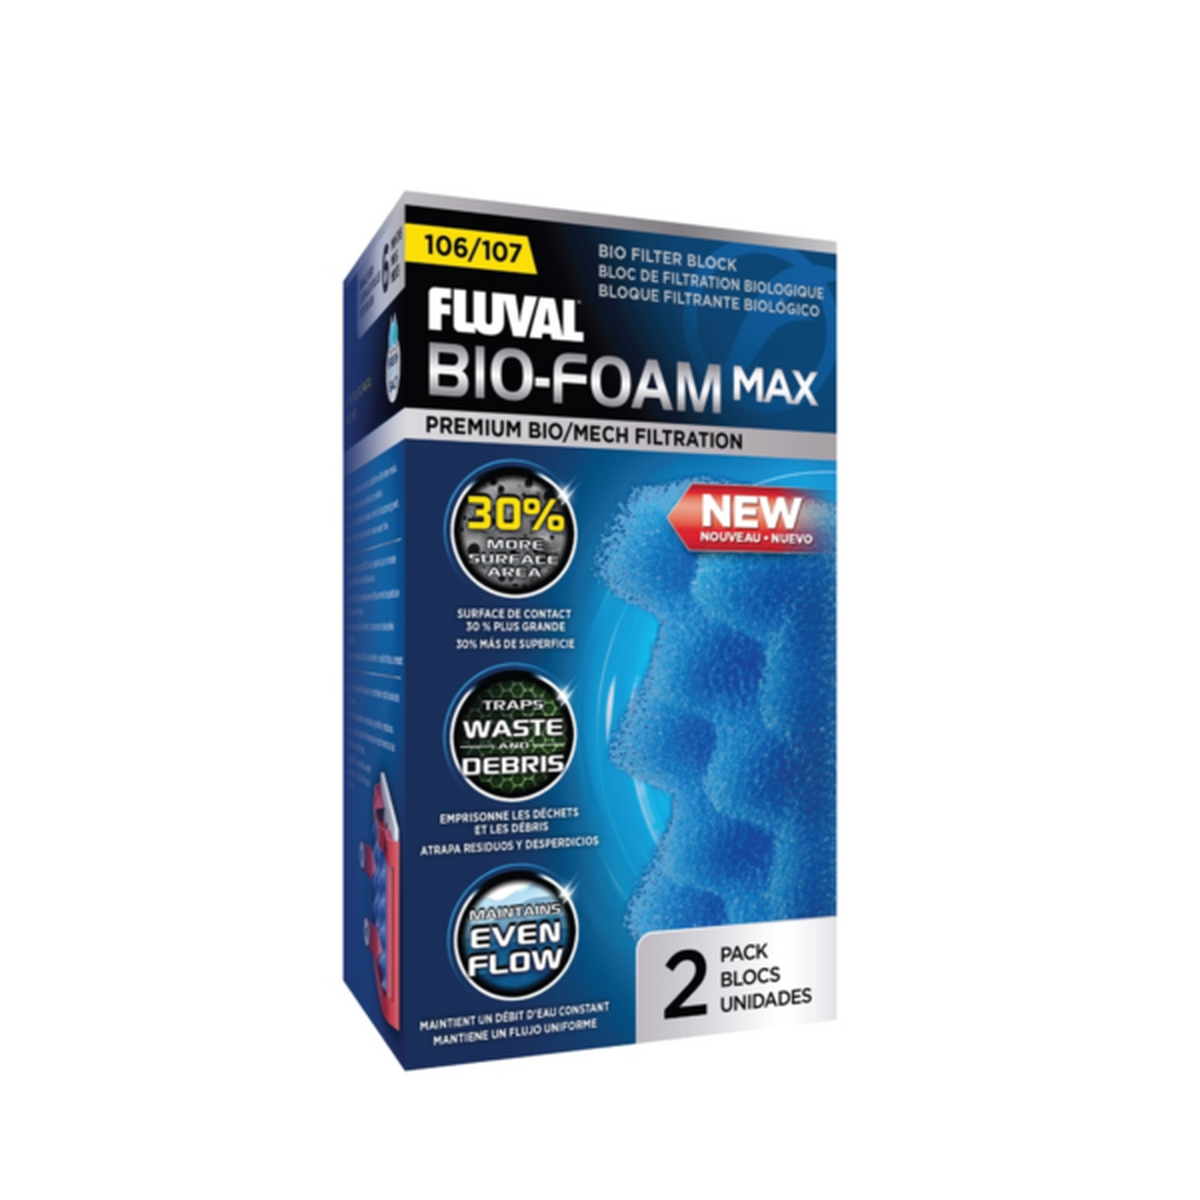 Fluval 106 / 107 Bio Foam Max 2 Pk